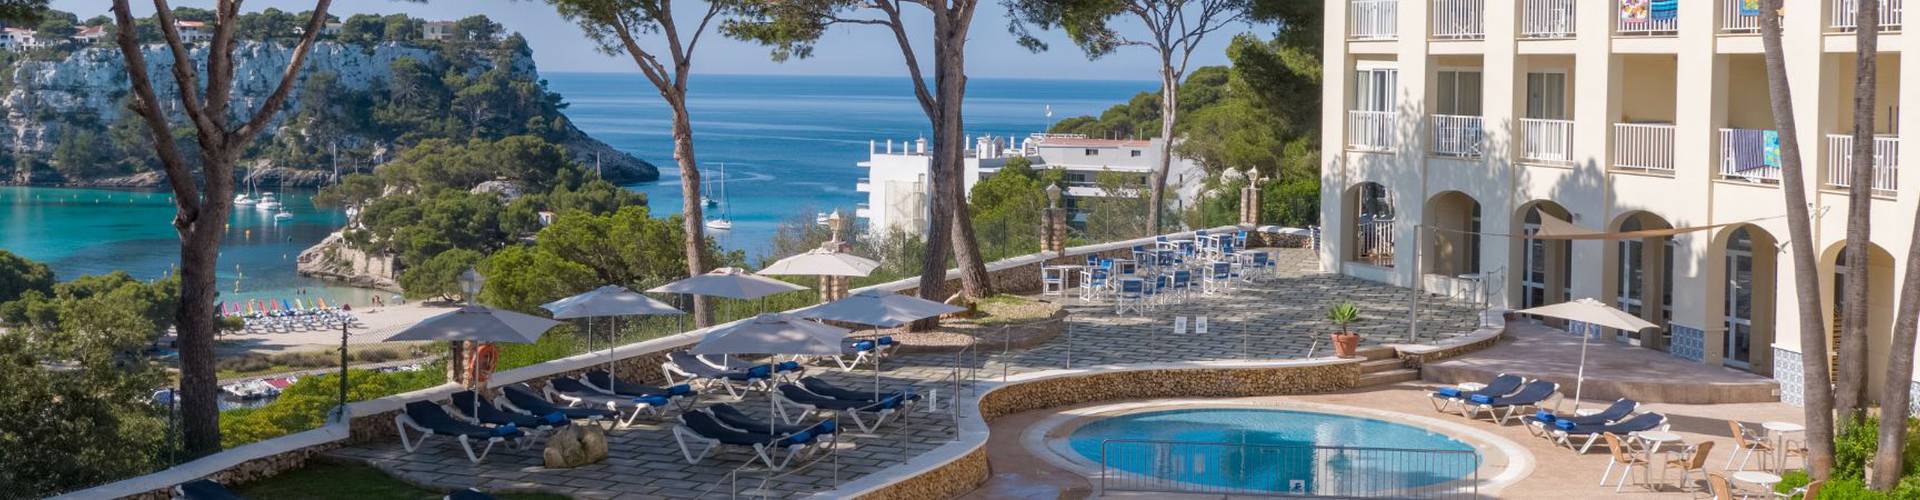 Comitas Hotels - Menorca - 